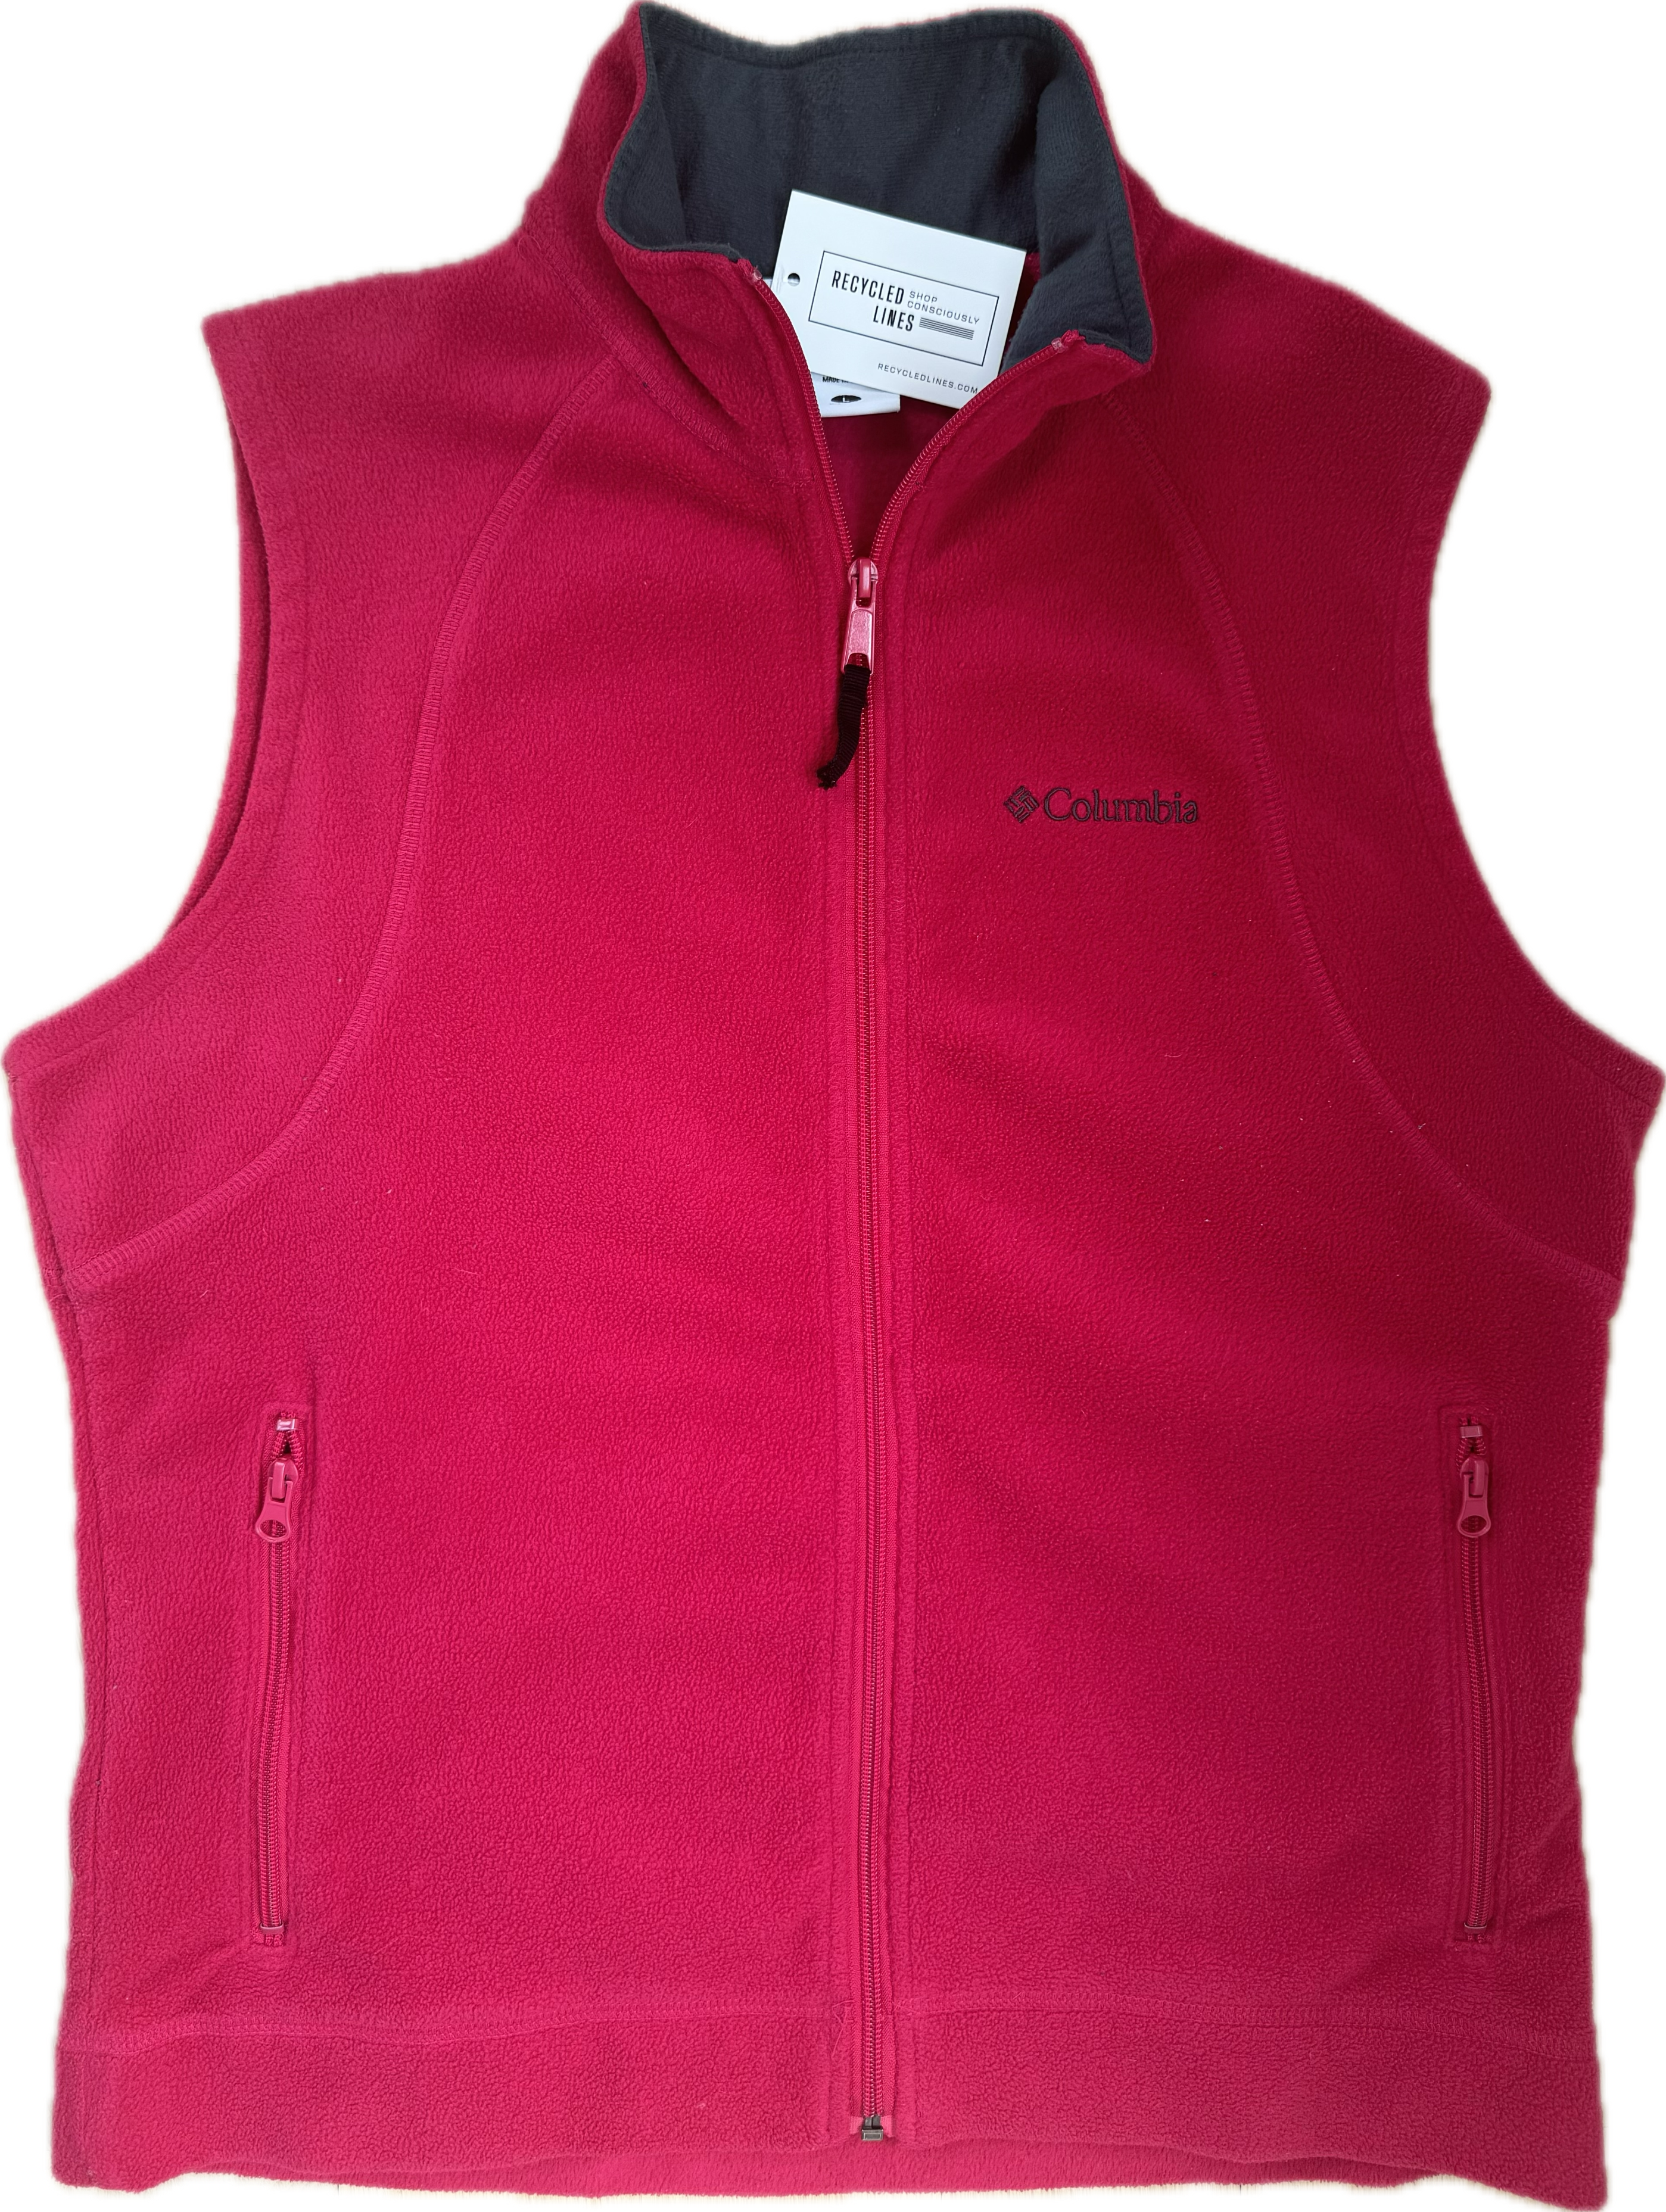 Columbia Fleece Vest, Hot Pink Womens Size L